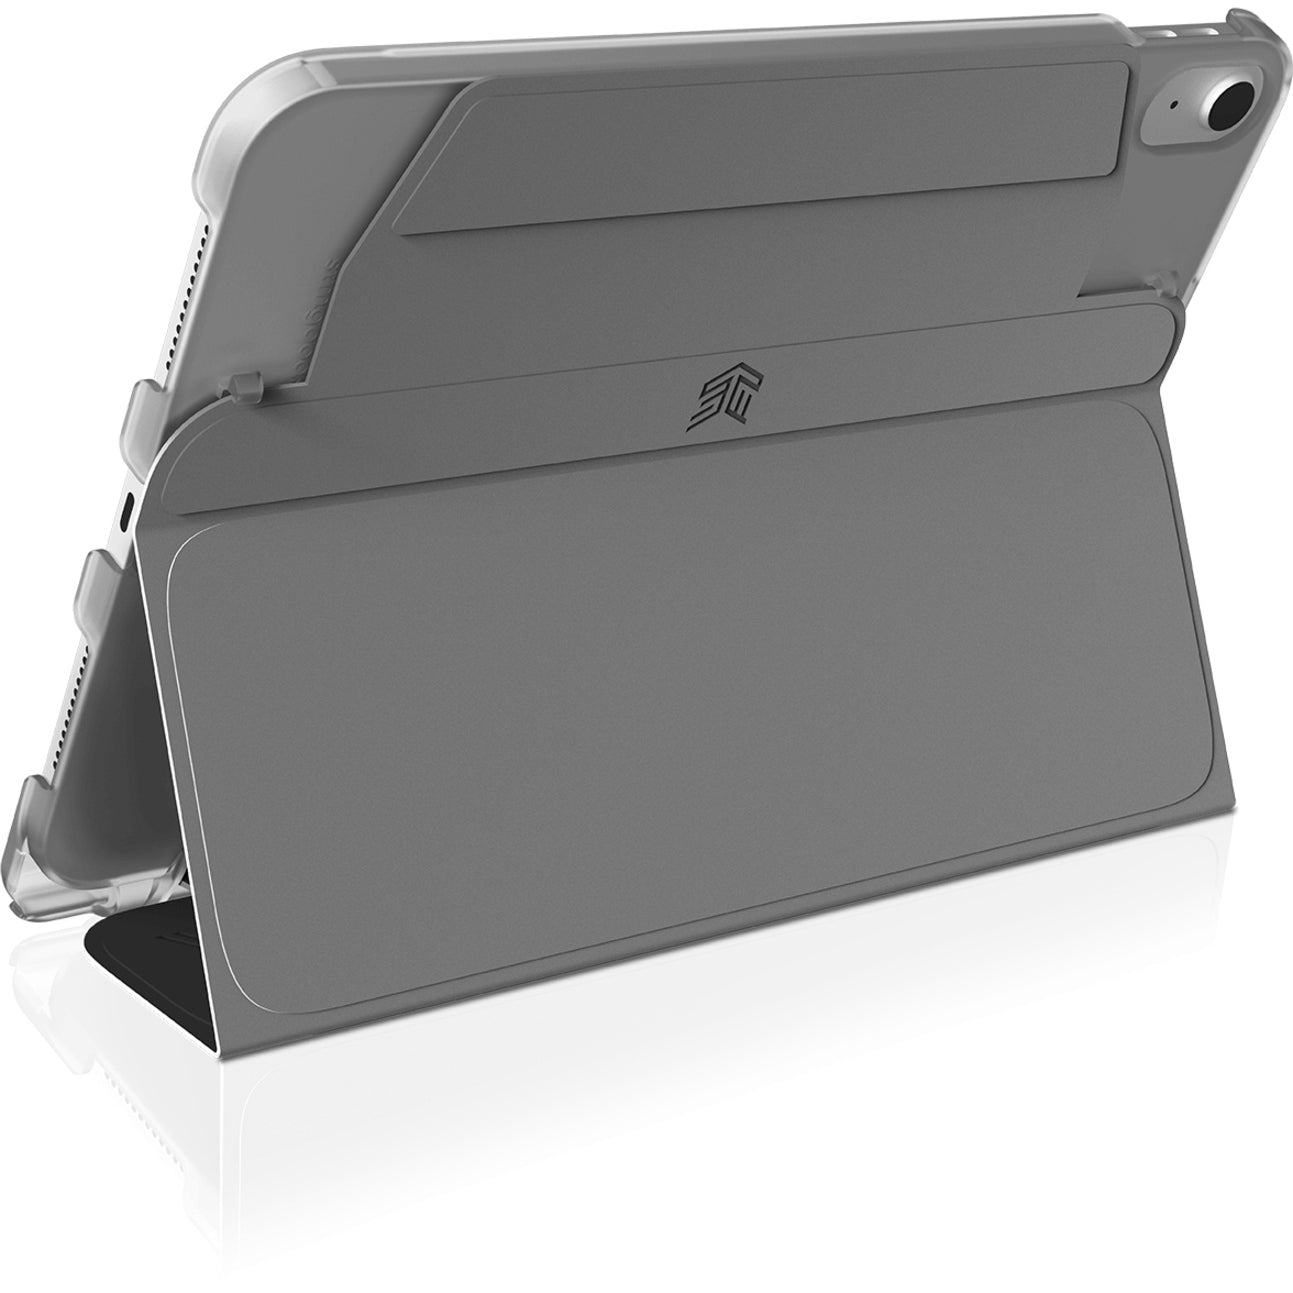 STM Goods STM-222-383KX-01 Studio iPad 10th Gen Carrying Case, Magnetic Closure, Black